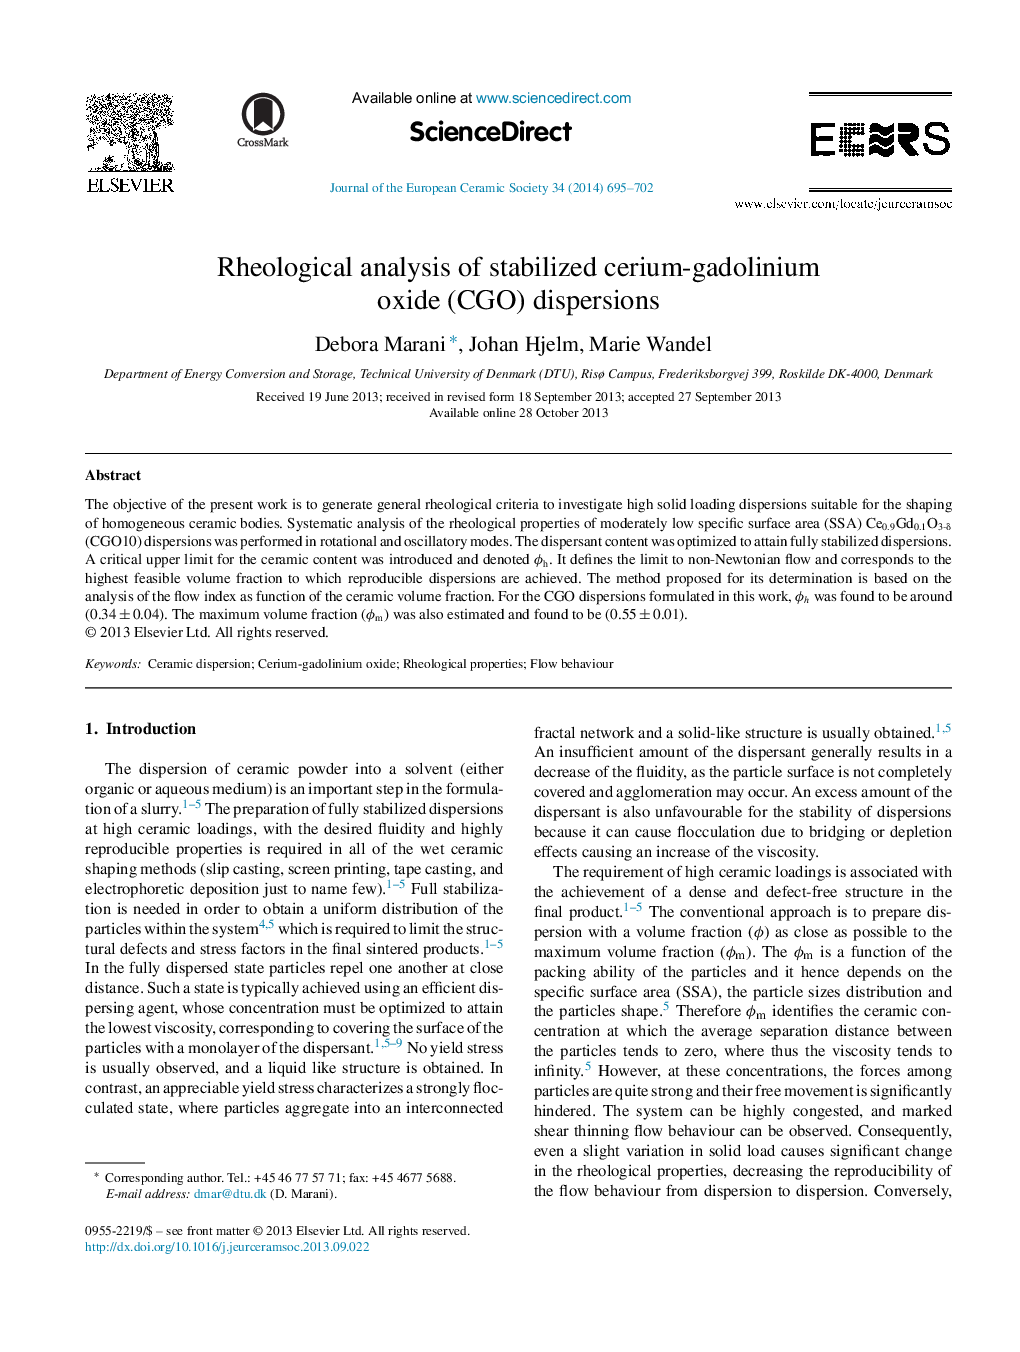 Rheological analysis of stabilized cerium-gadolinium oxide (CGO) dispersions